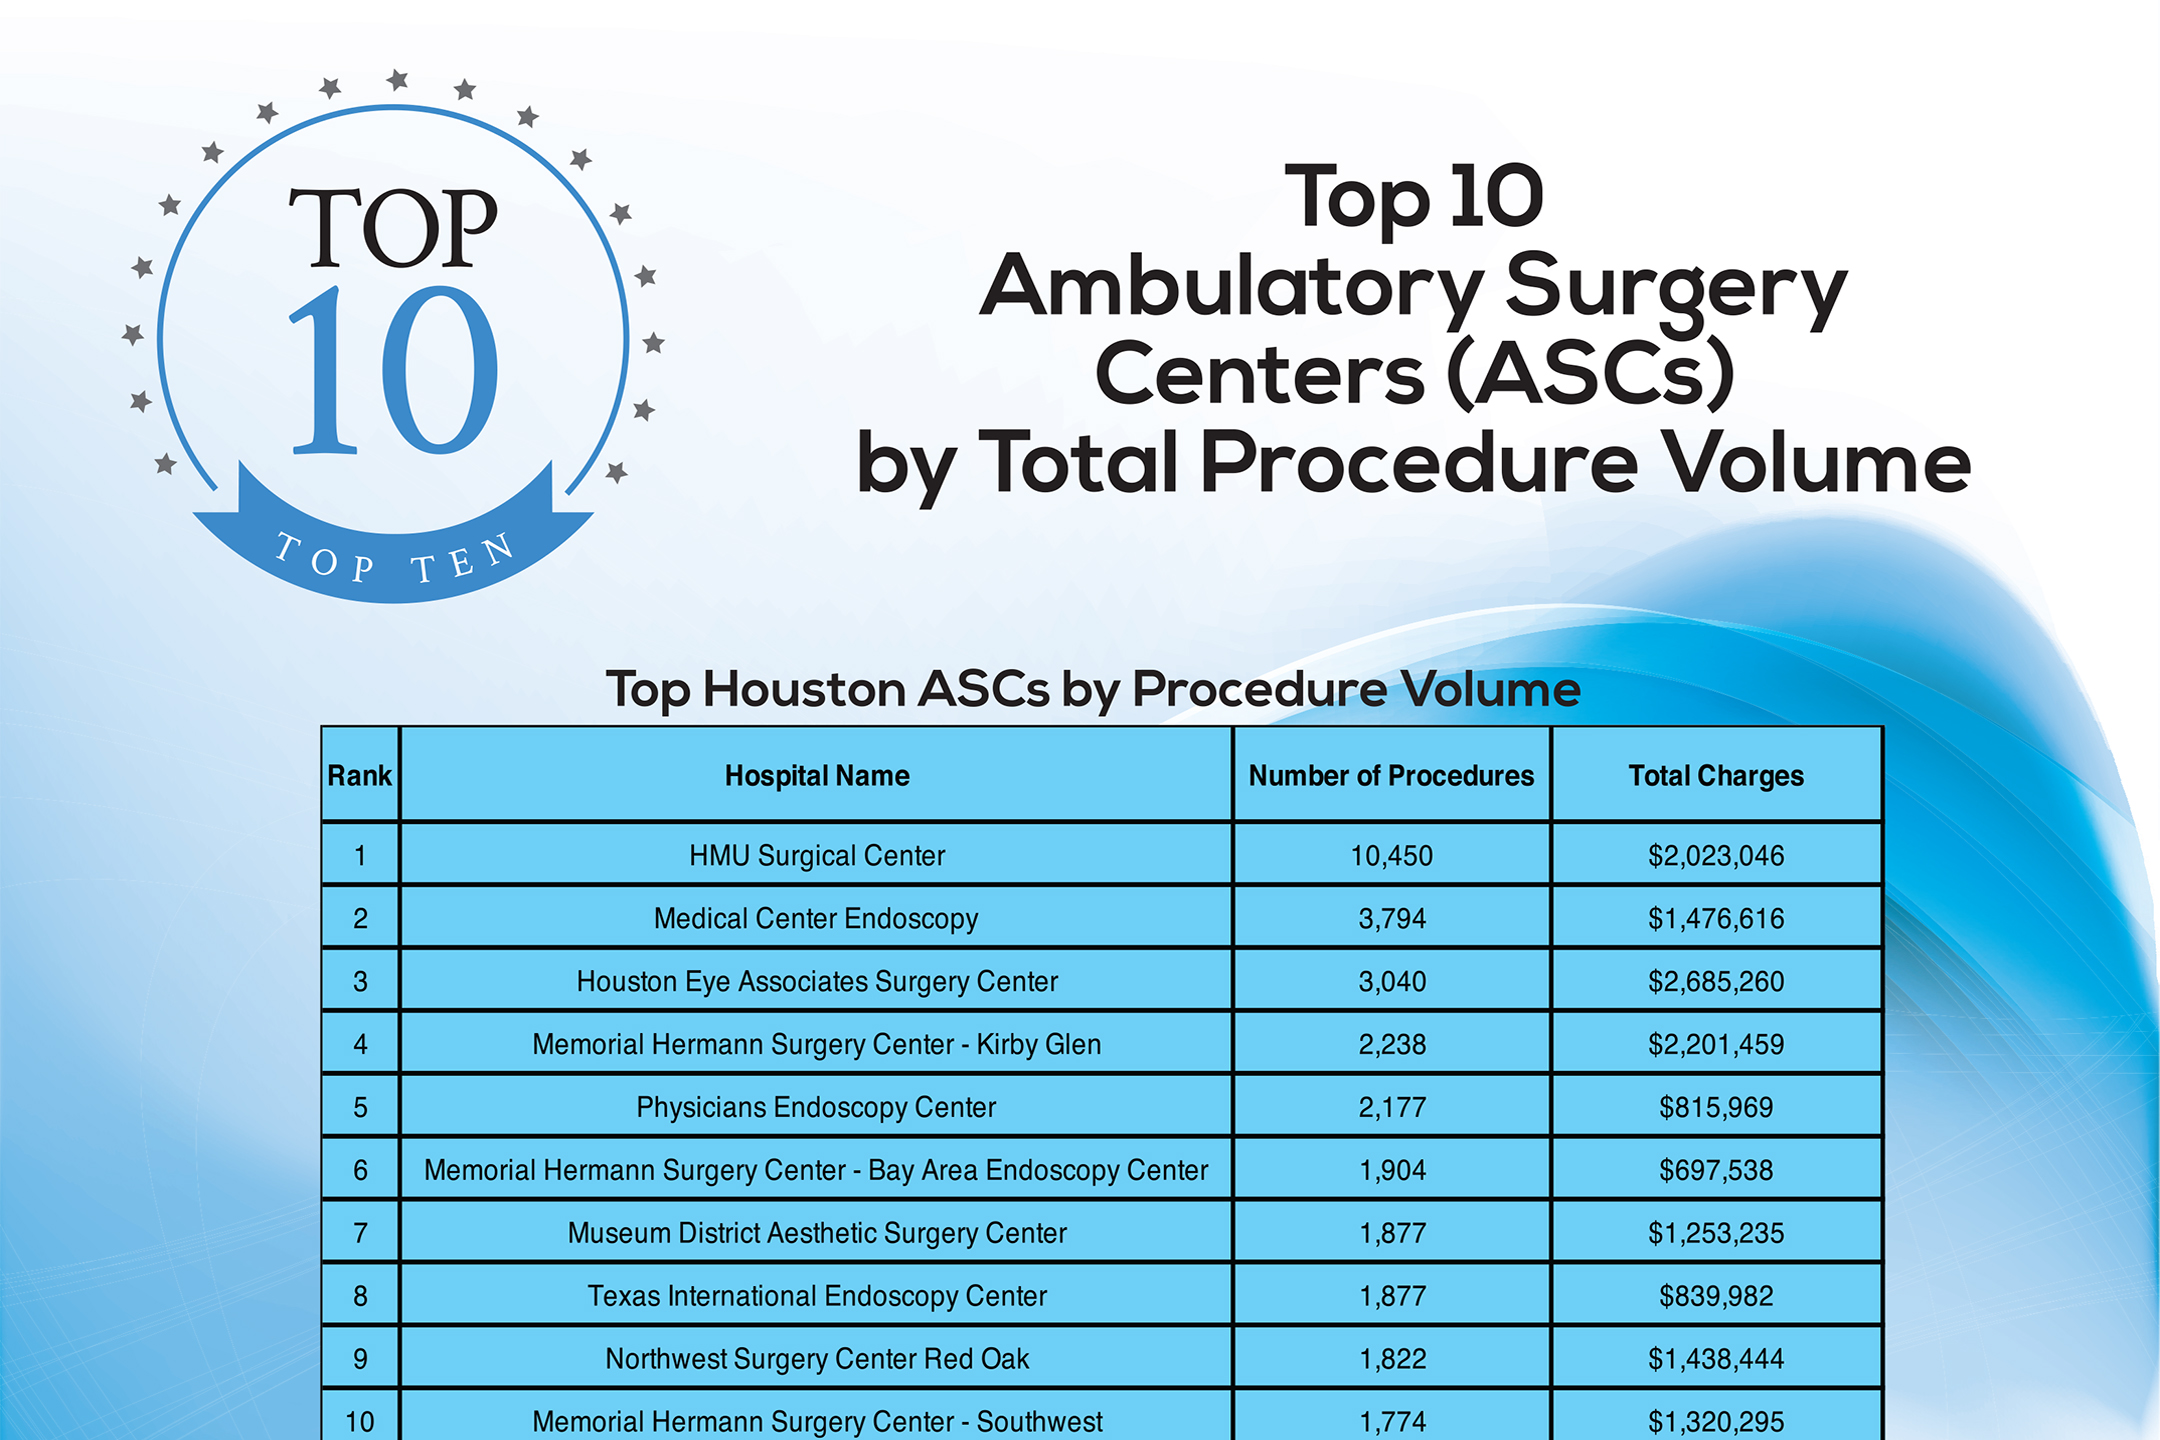 Top 10 Ambulatory Surgery Centers (ASCs) by Total Procedure Volume